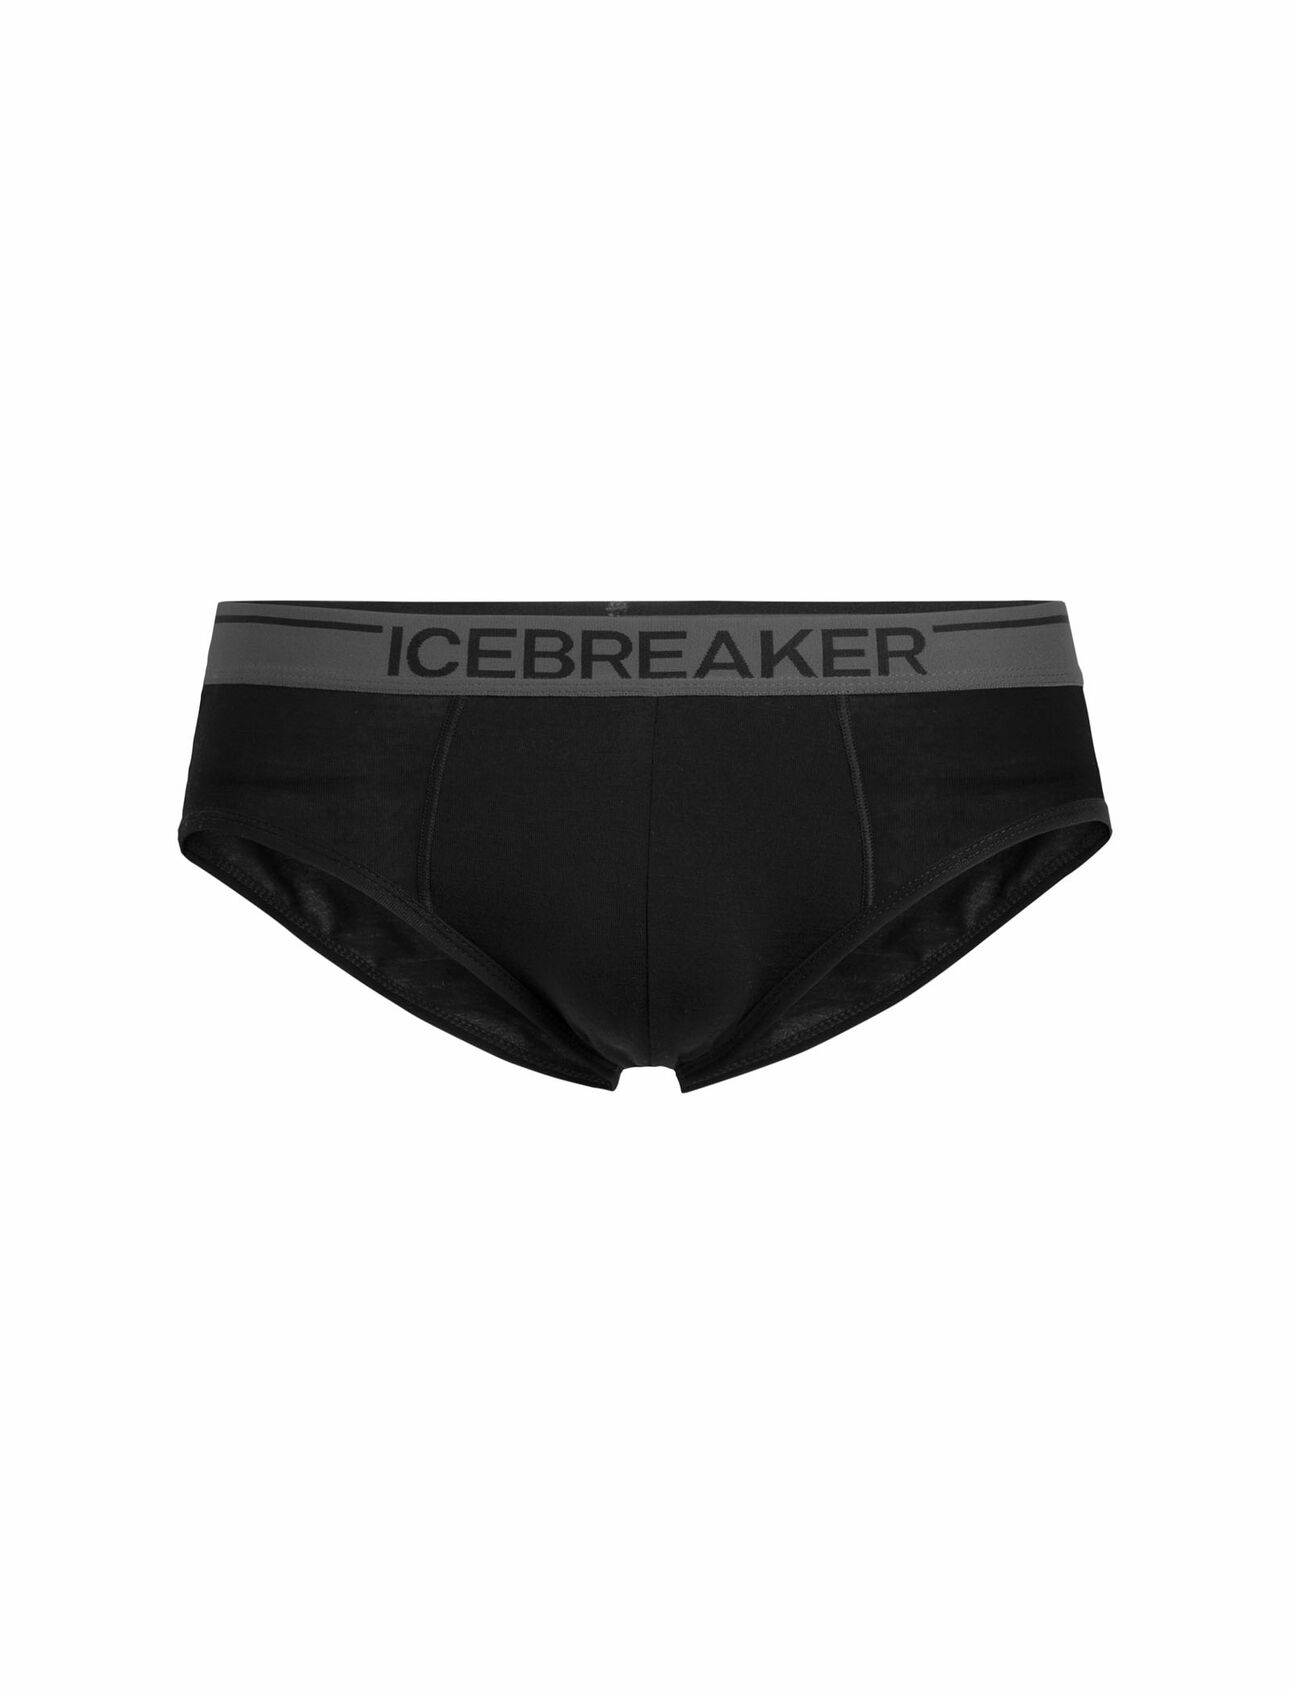 Icebreaker Anatomica Briefs (Men)